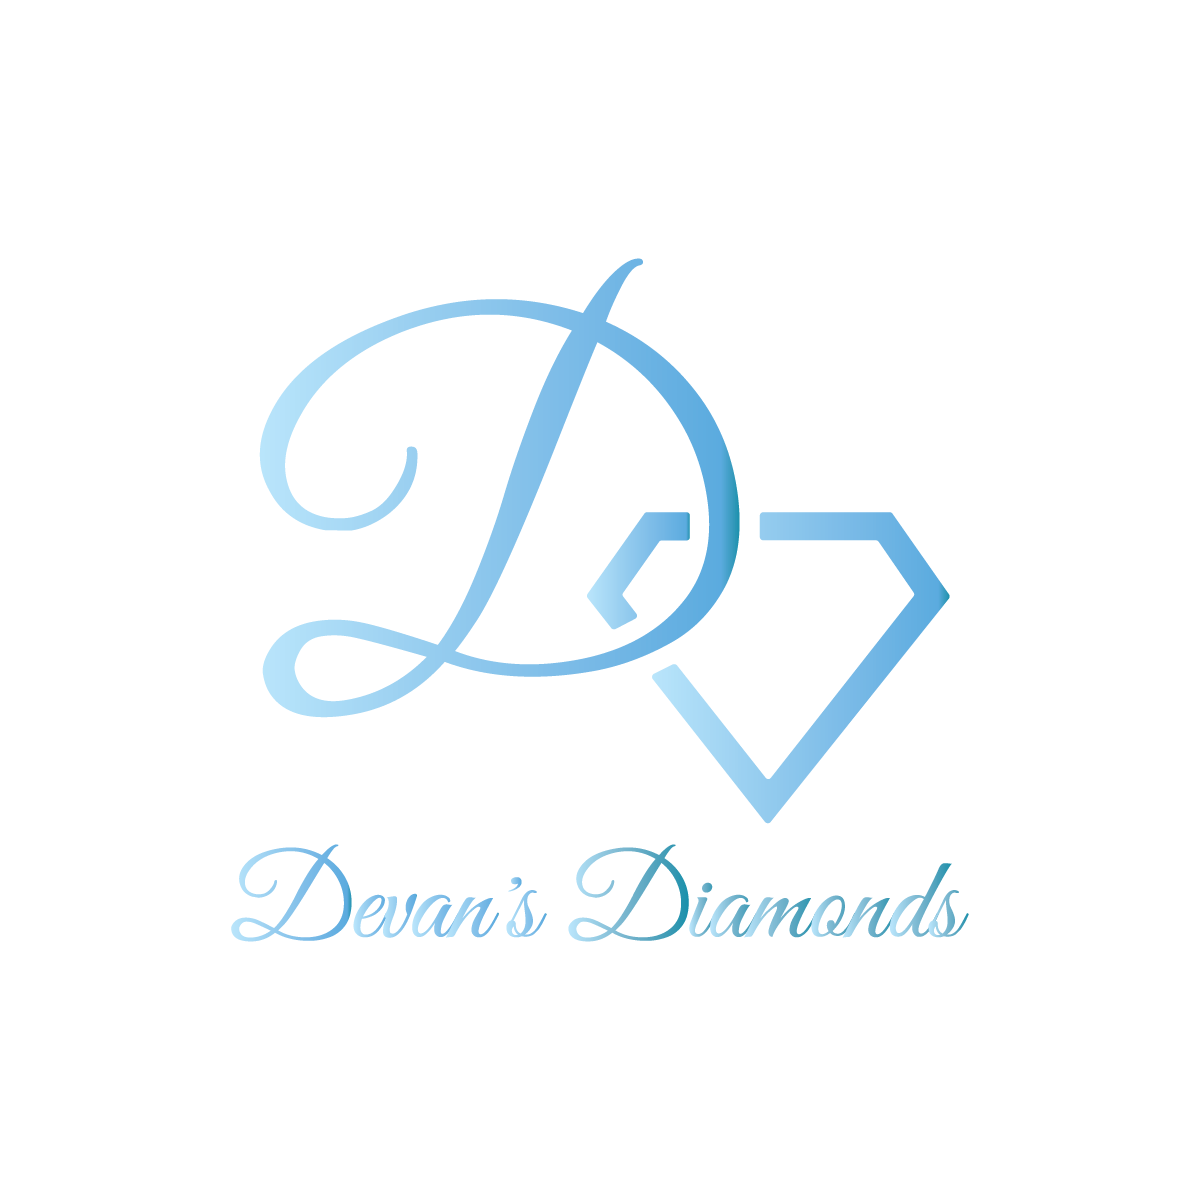 Devan's Diamond Co.